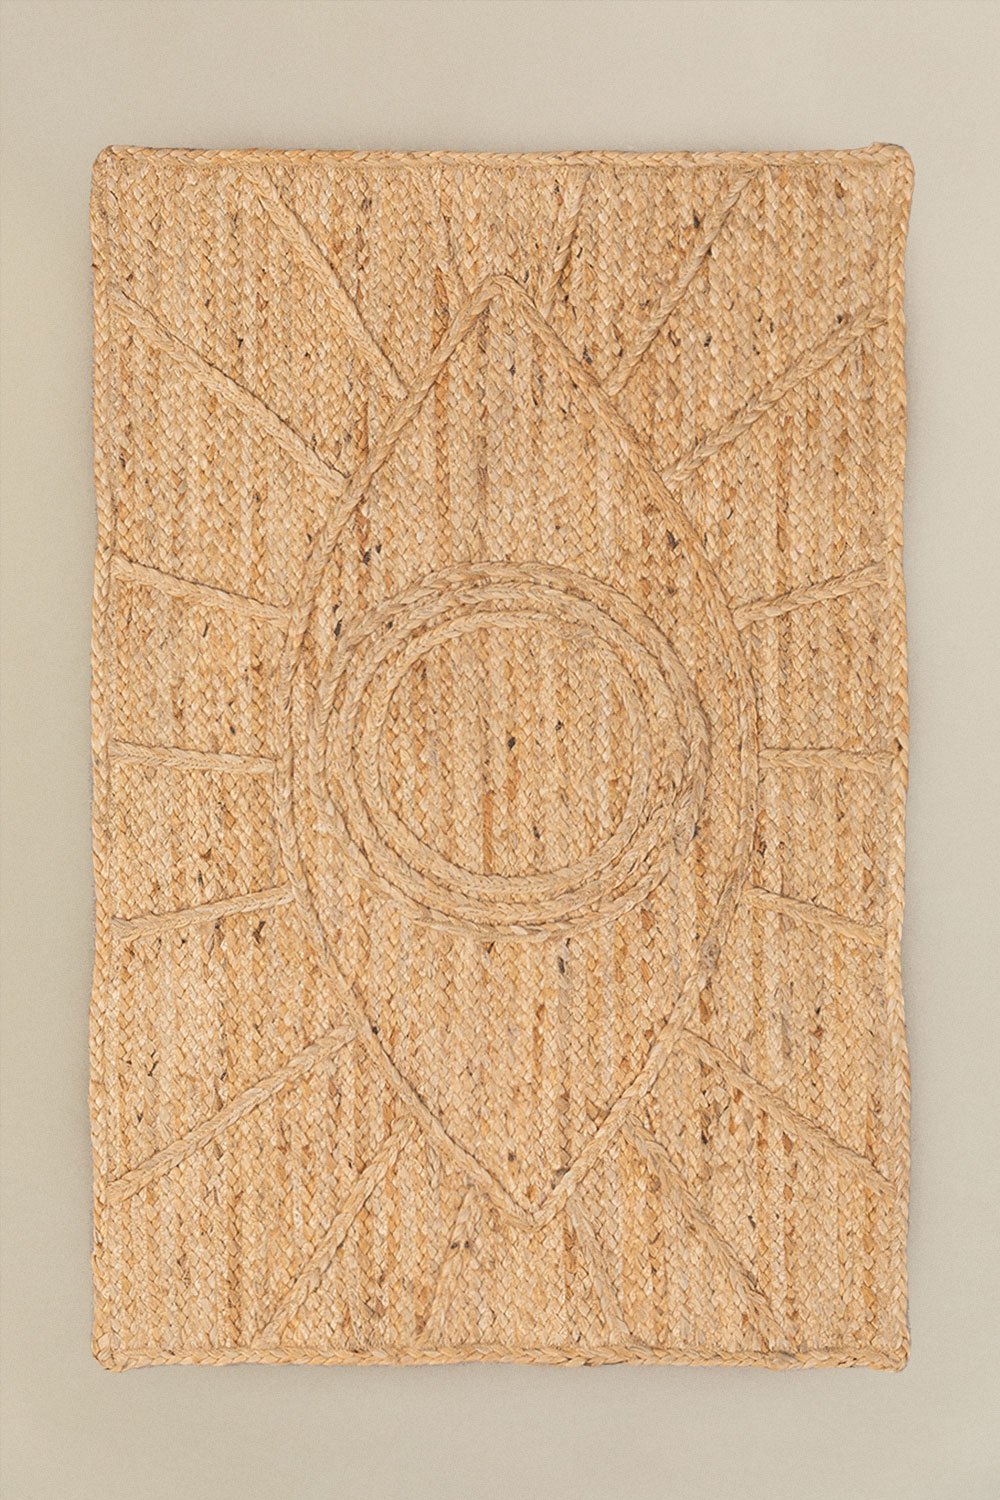 XL Jute Braided doormat (90 x 60 cm) Elaine, gallery image 1